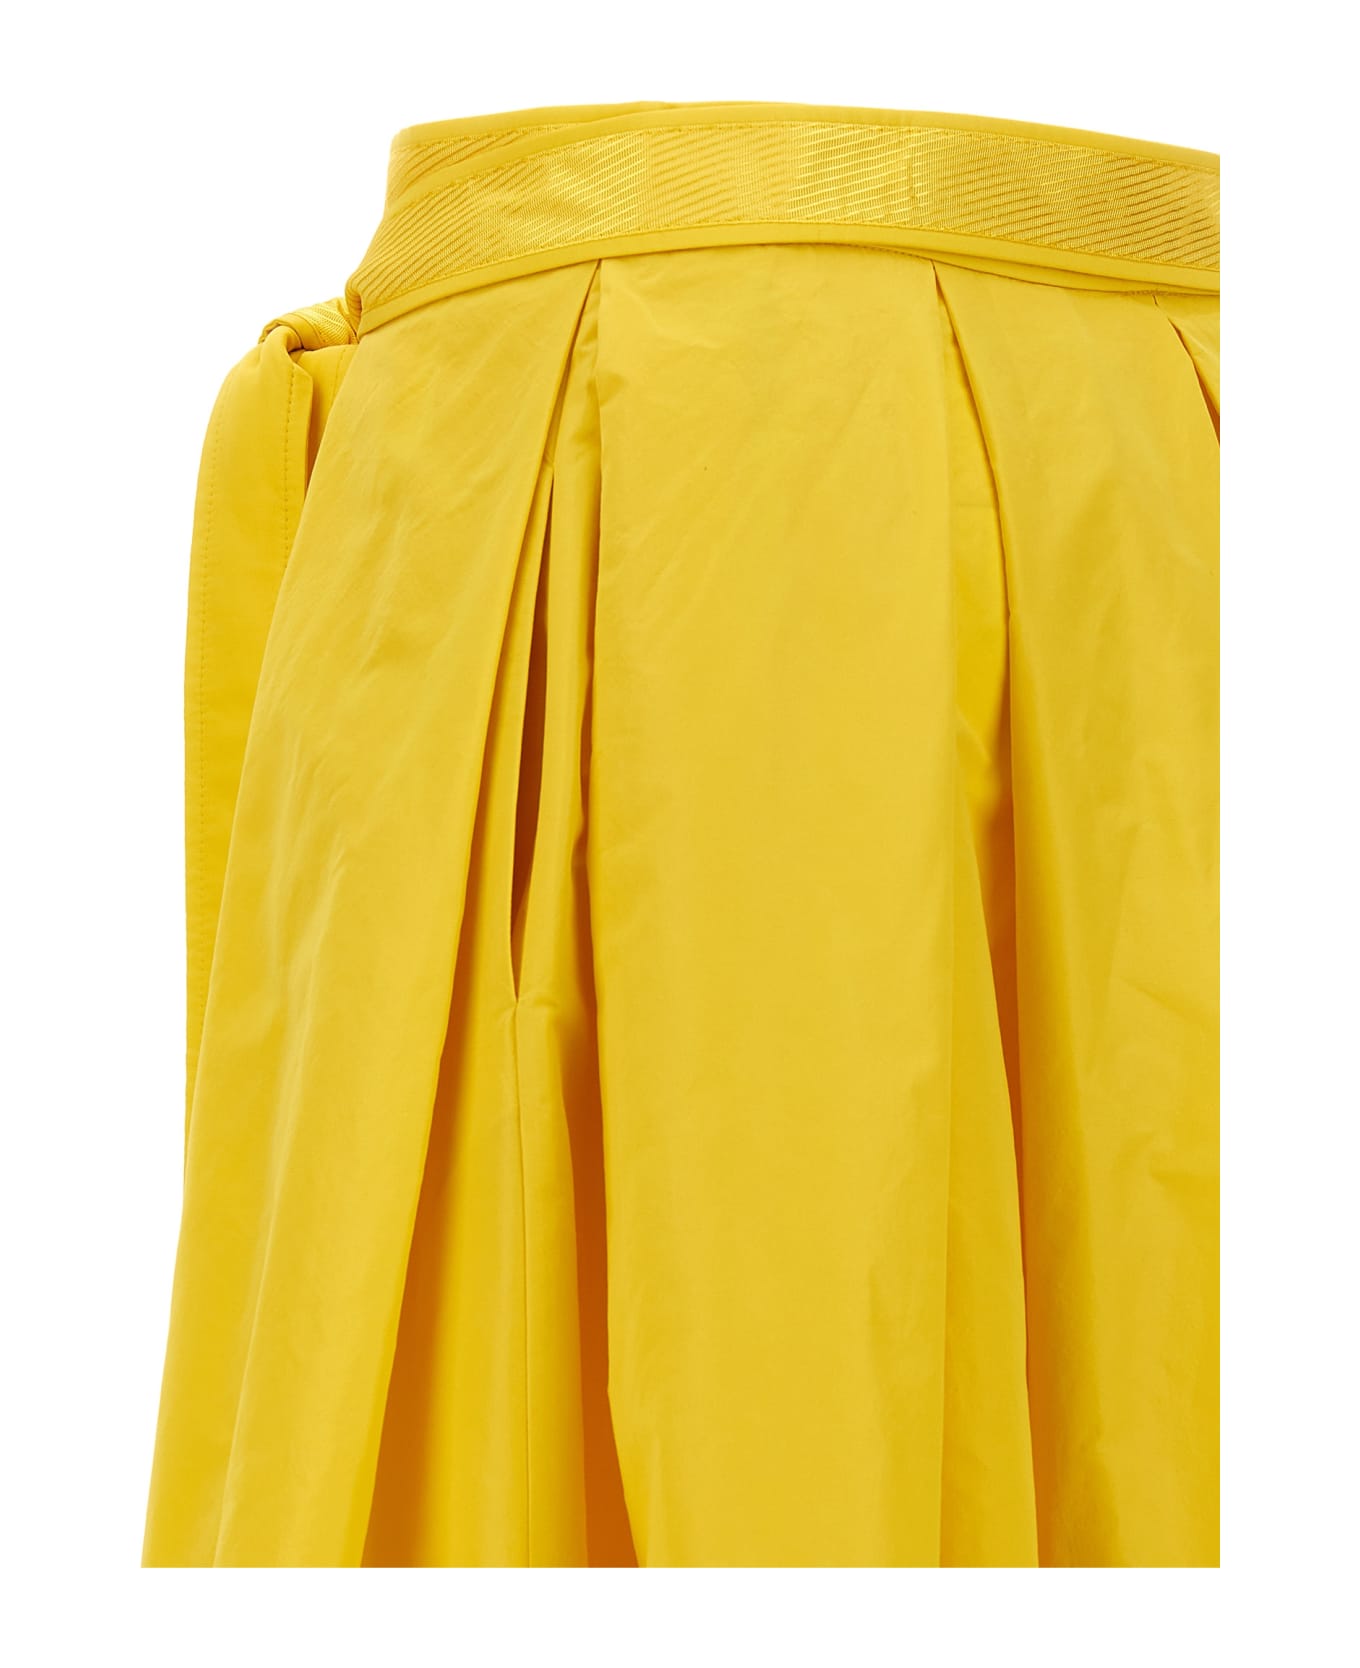 Pinko Nocepesca Taffeta Skirt - Yellow スカート